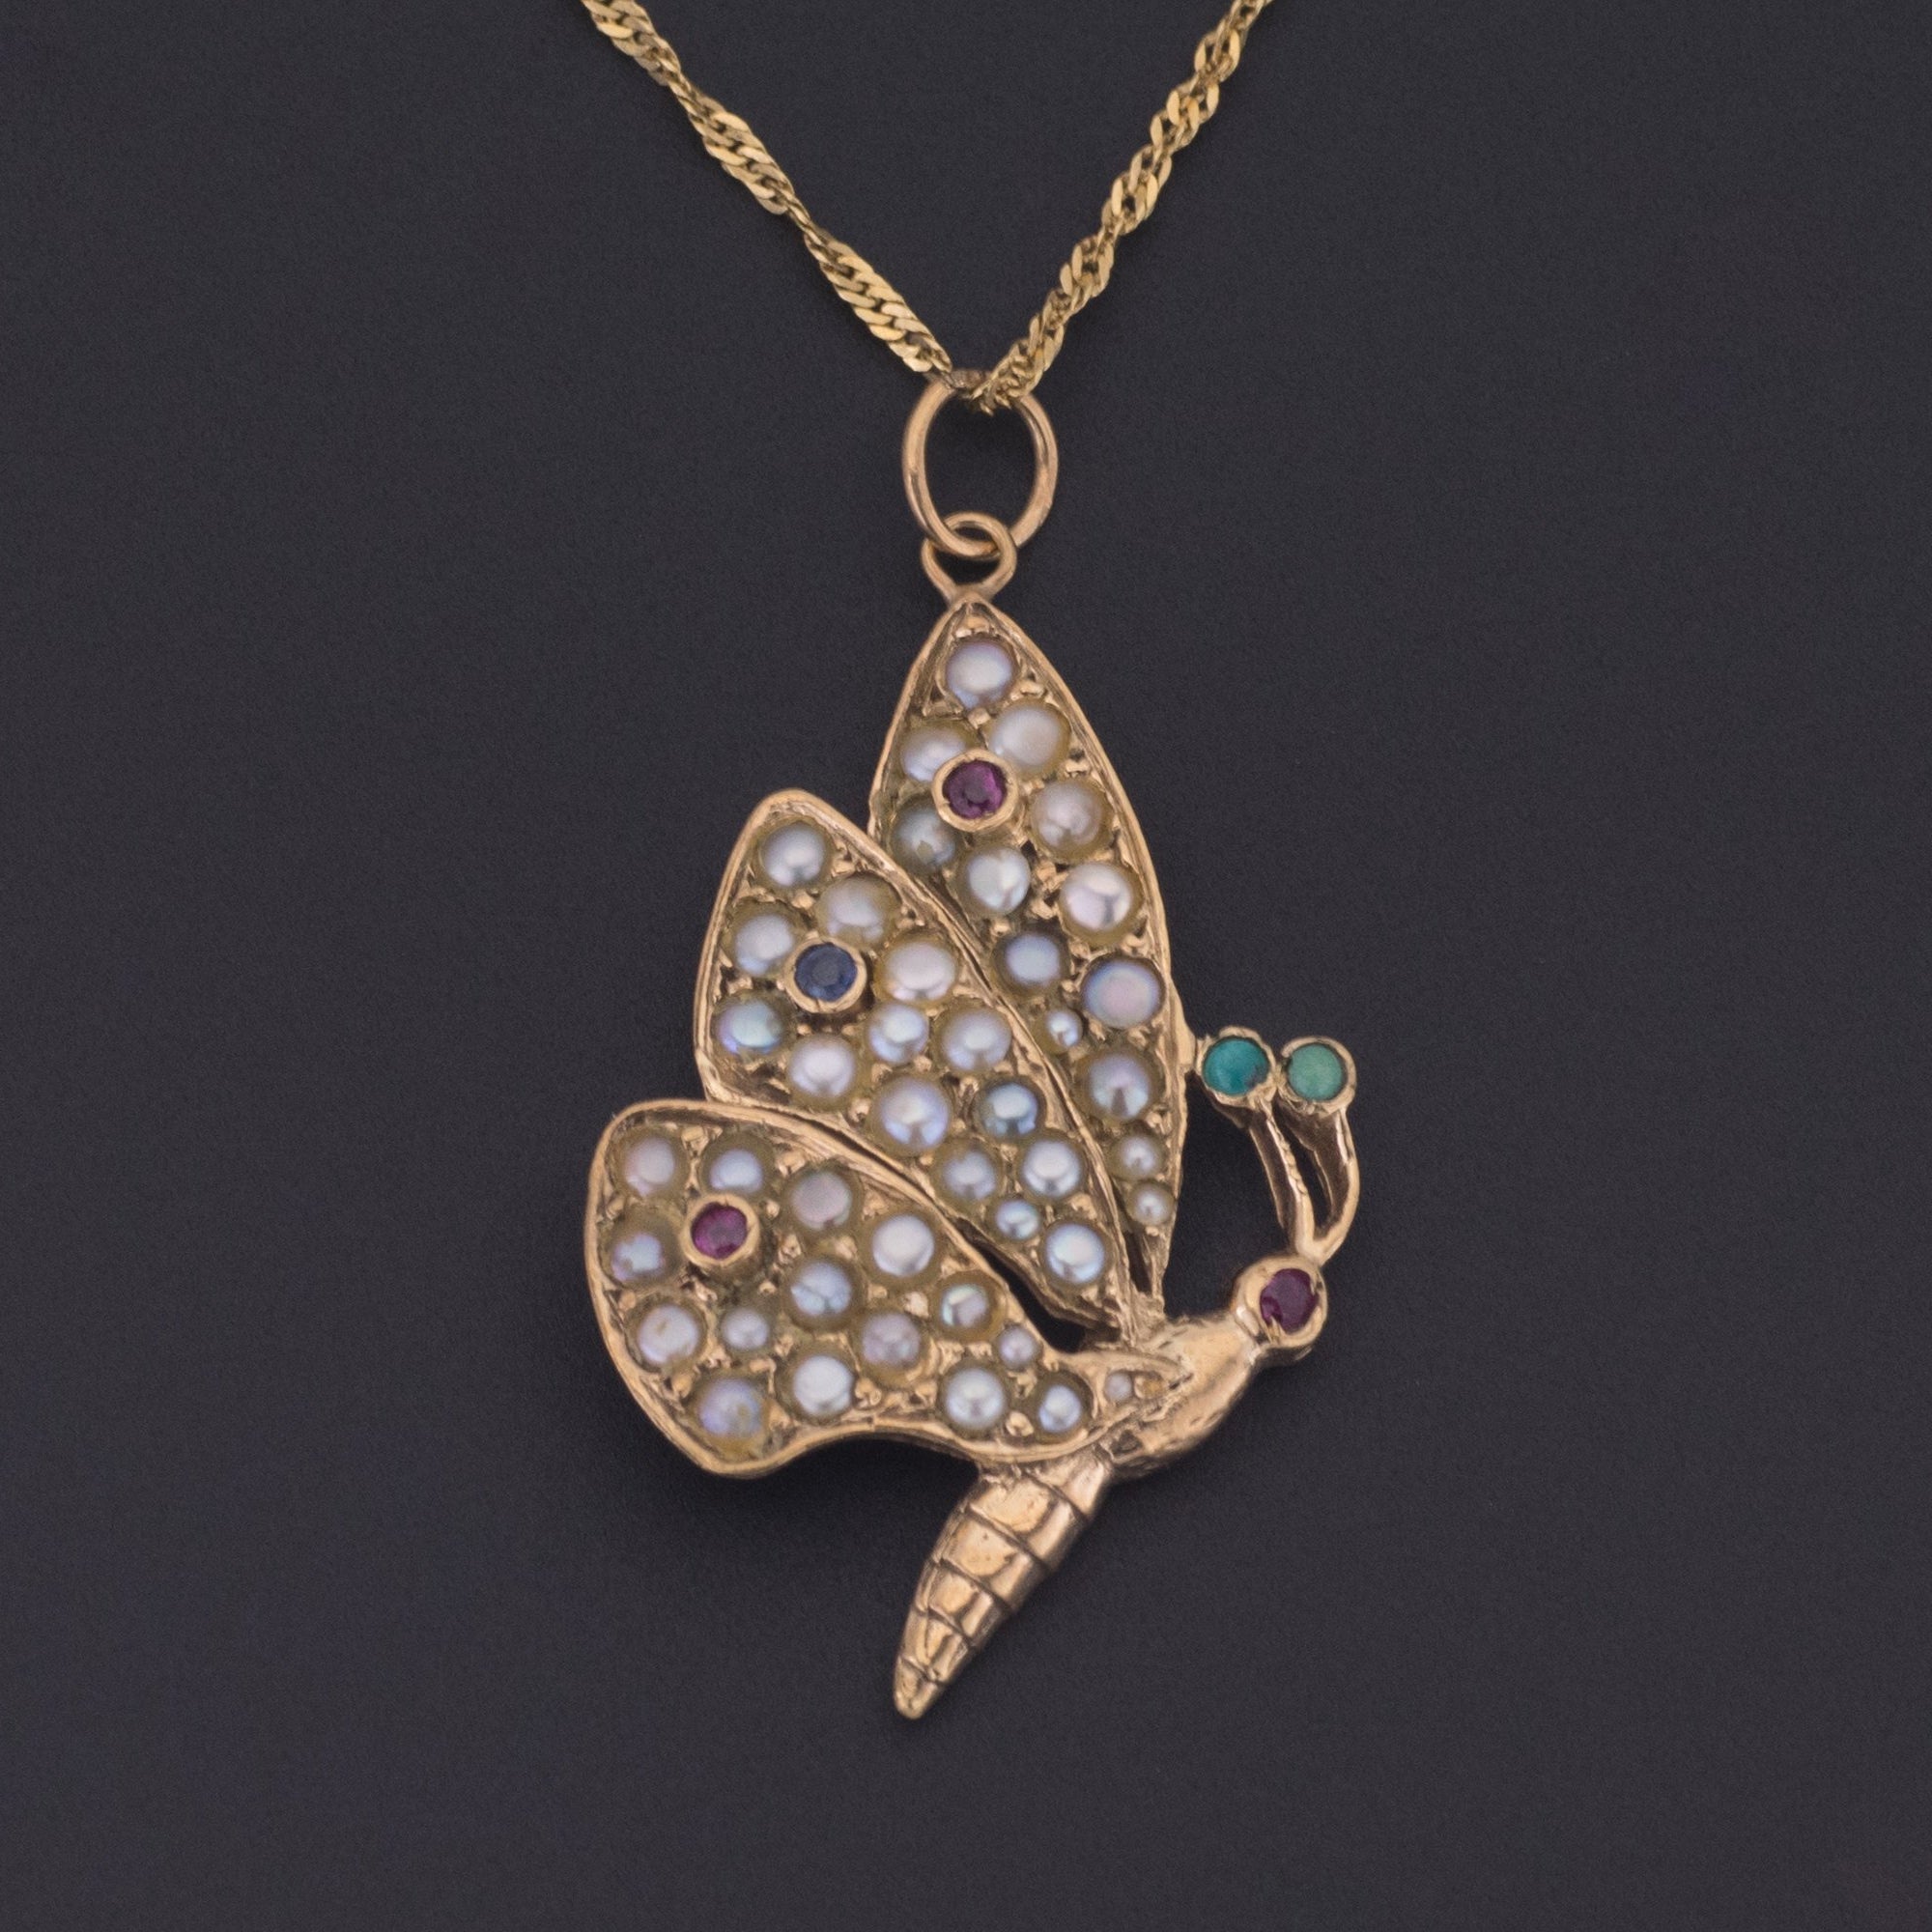 14k Gold Butterfly Pendant | Bu | Pearl & Gemstone Butterfly Pendant on Optional 14k Chain